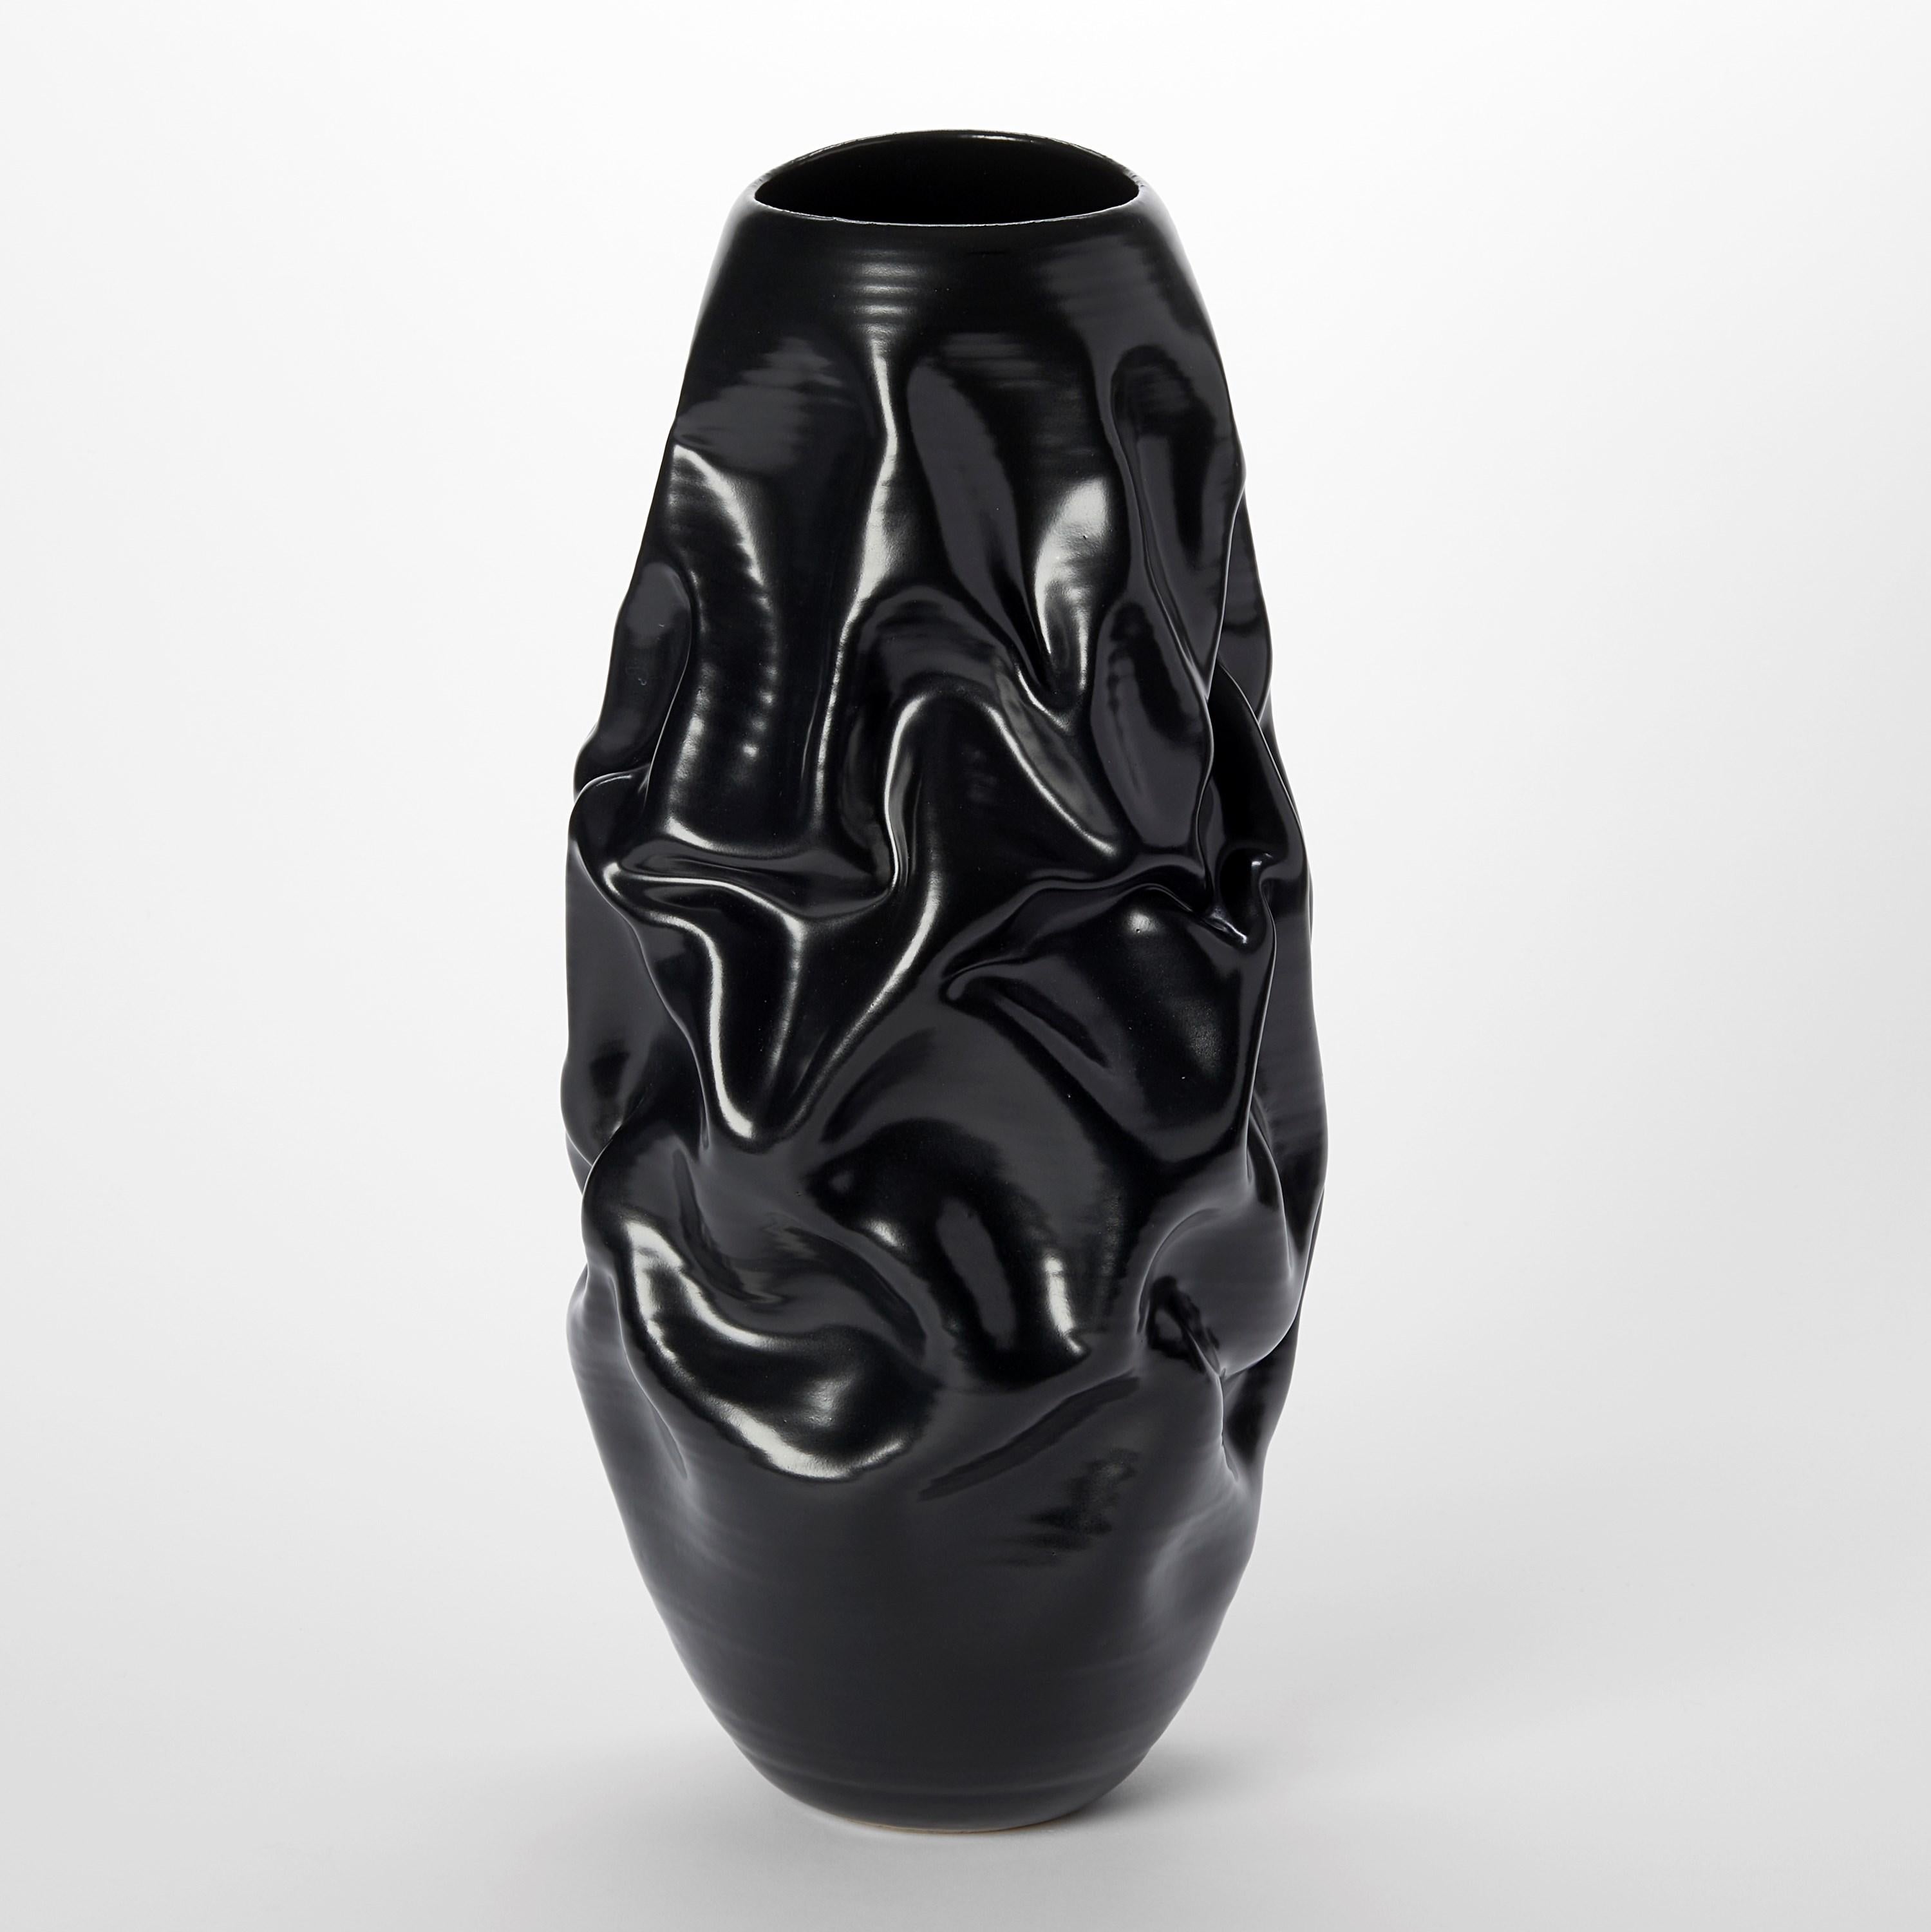 Organic Modern Tall Crumpled Form No 113, black ceramic sculpture by Nicholas Arroyave-Portela For Sale